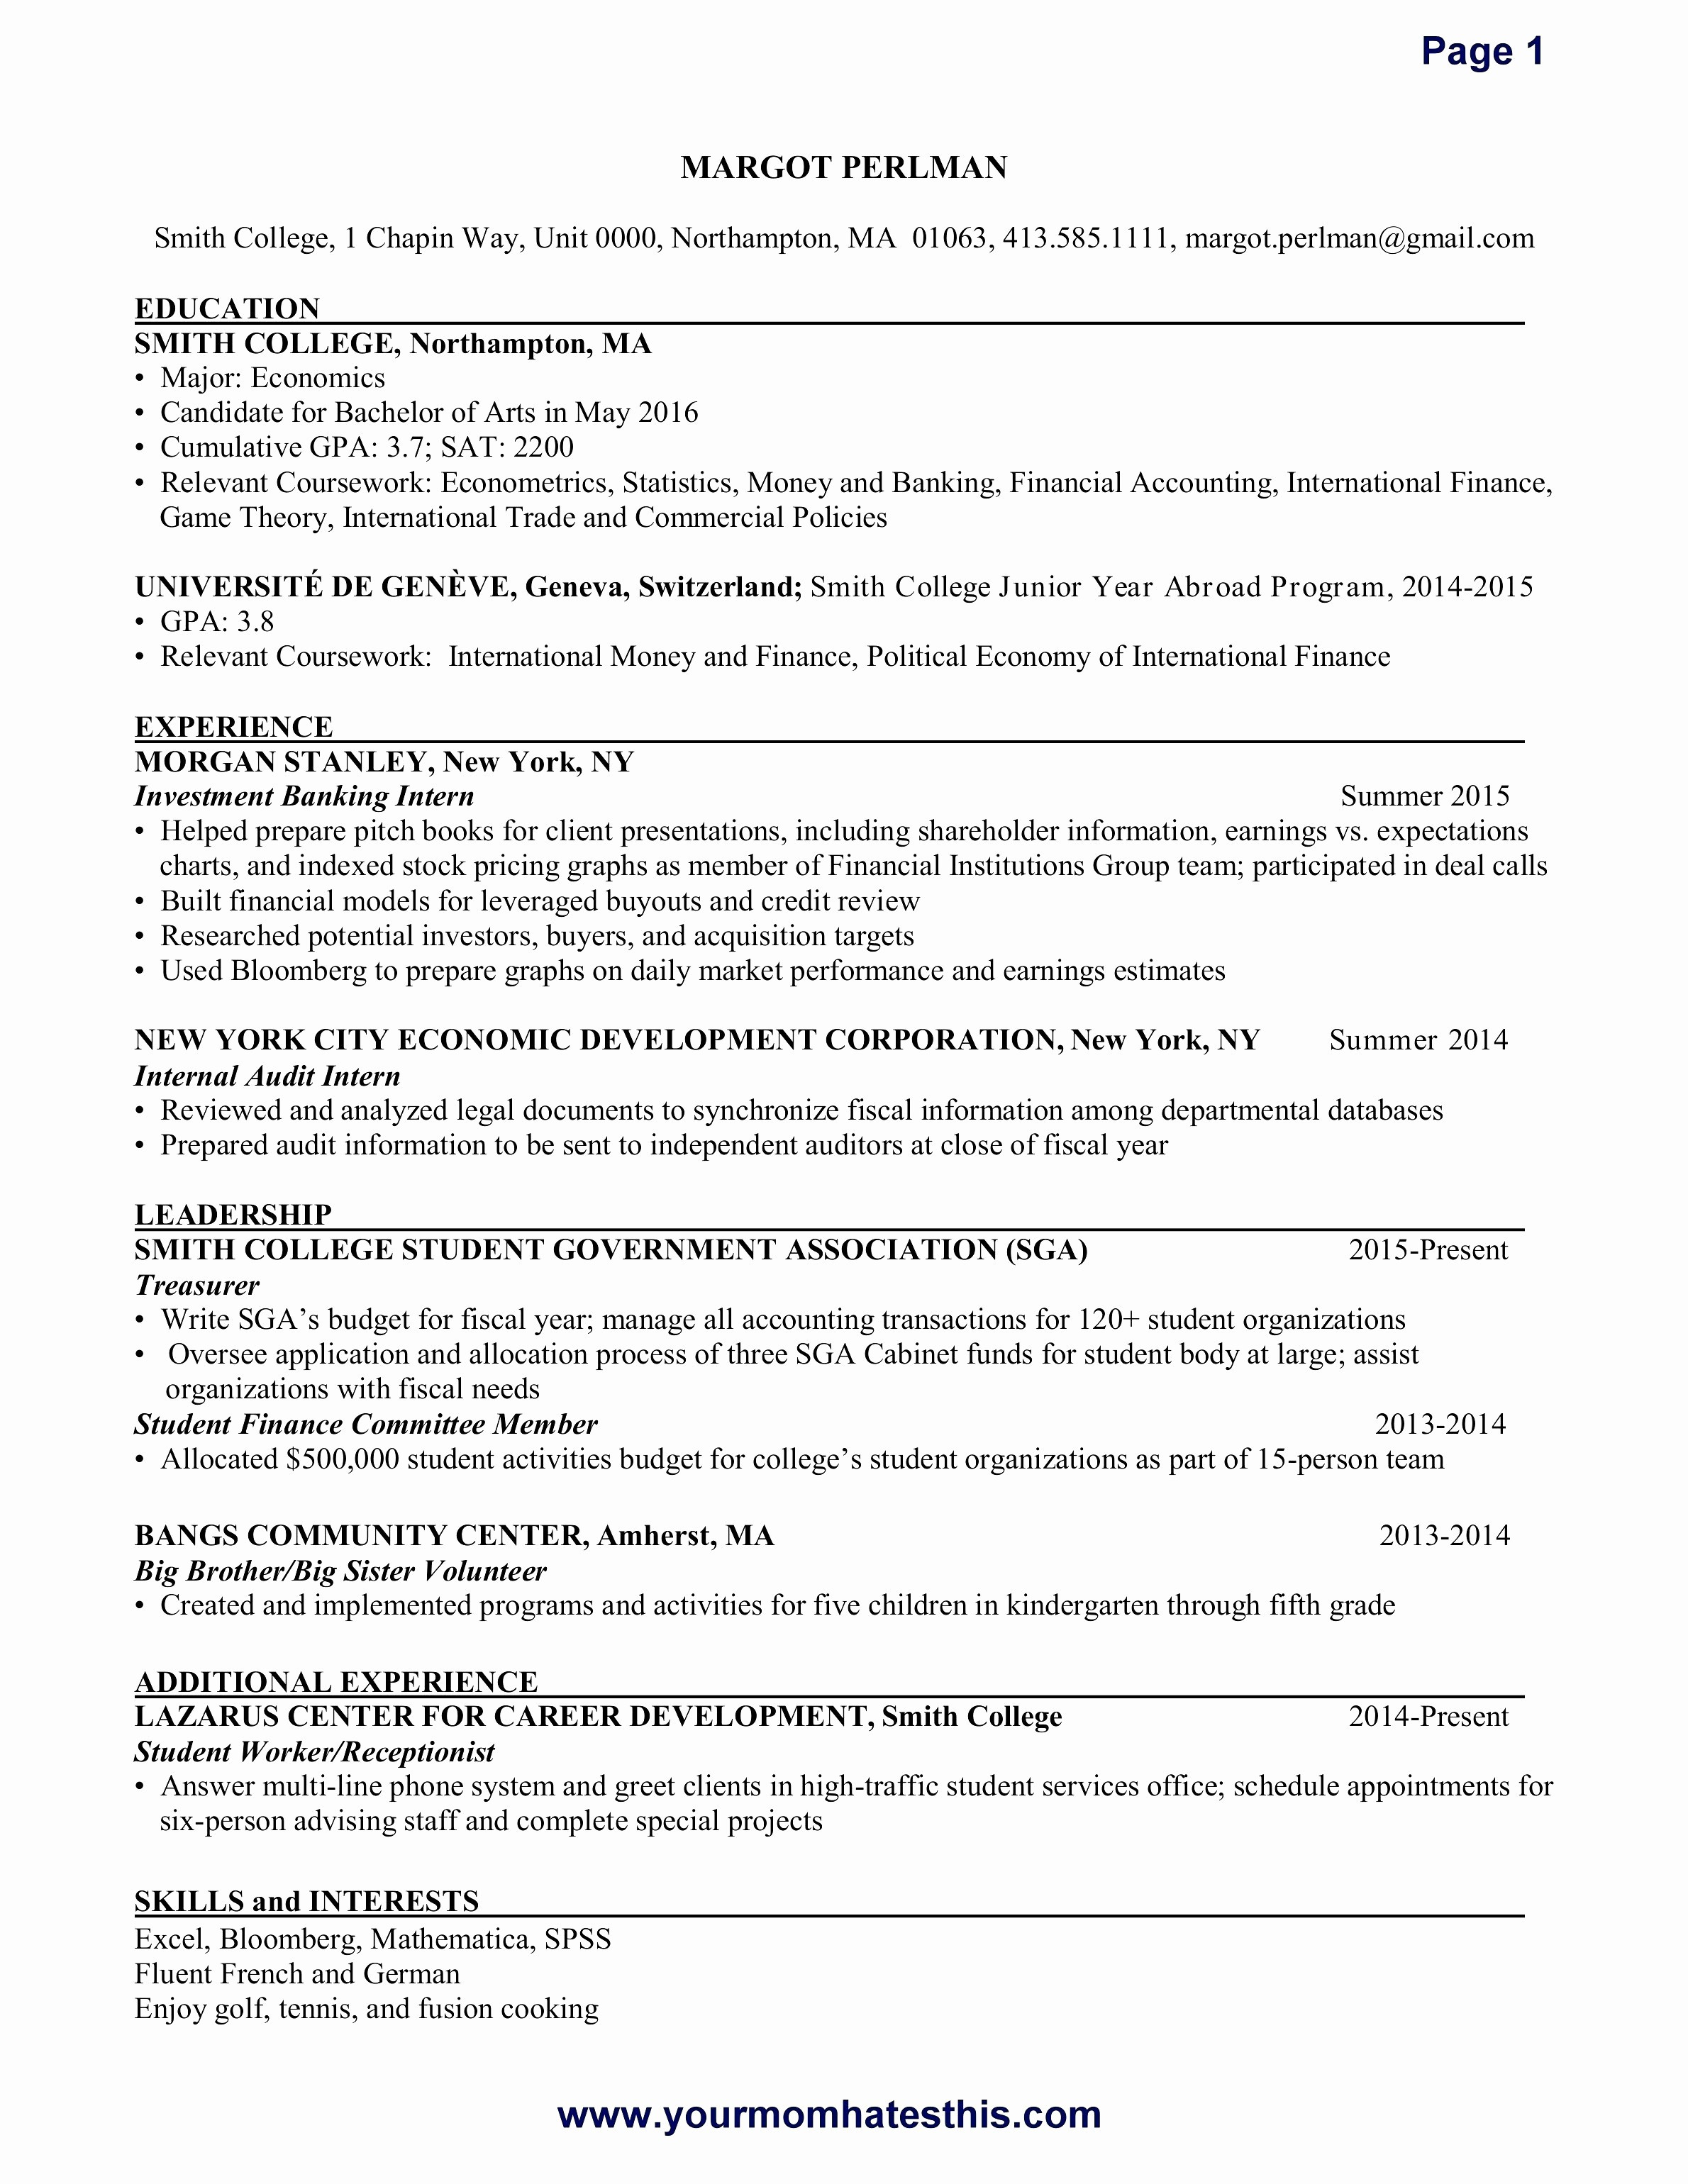 Free Resume Templates Microsoft Word Retail Manager Resume Template Assistant Store Templates free resume templates microsoft word|wikiresume.com